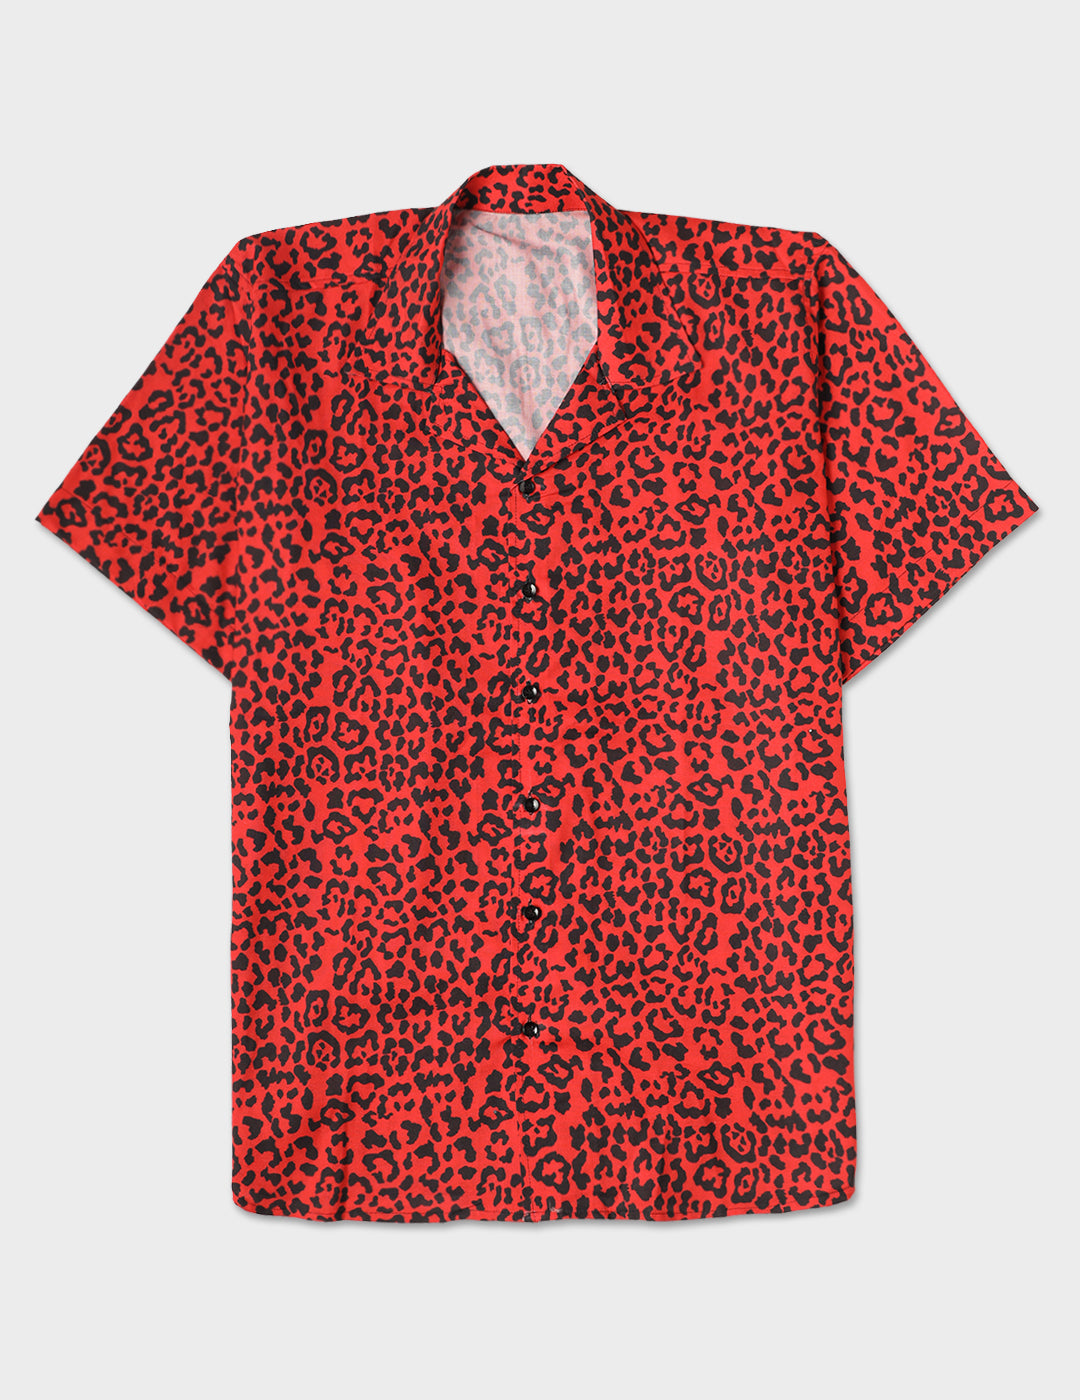 Unisex Red Leopard Aloha Shirt